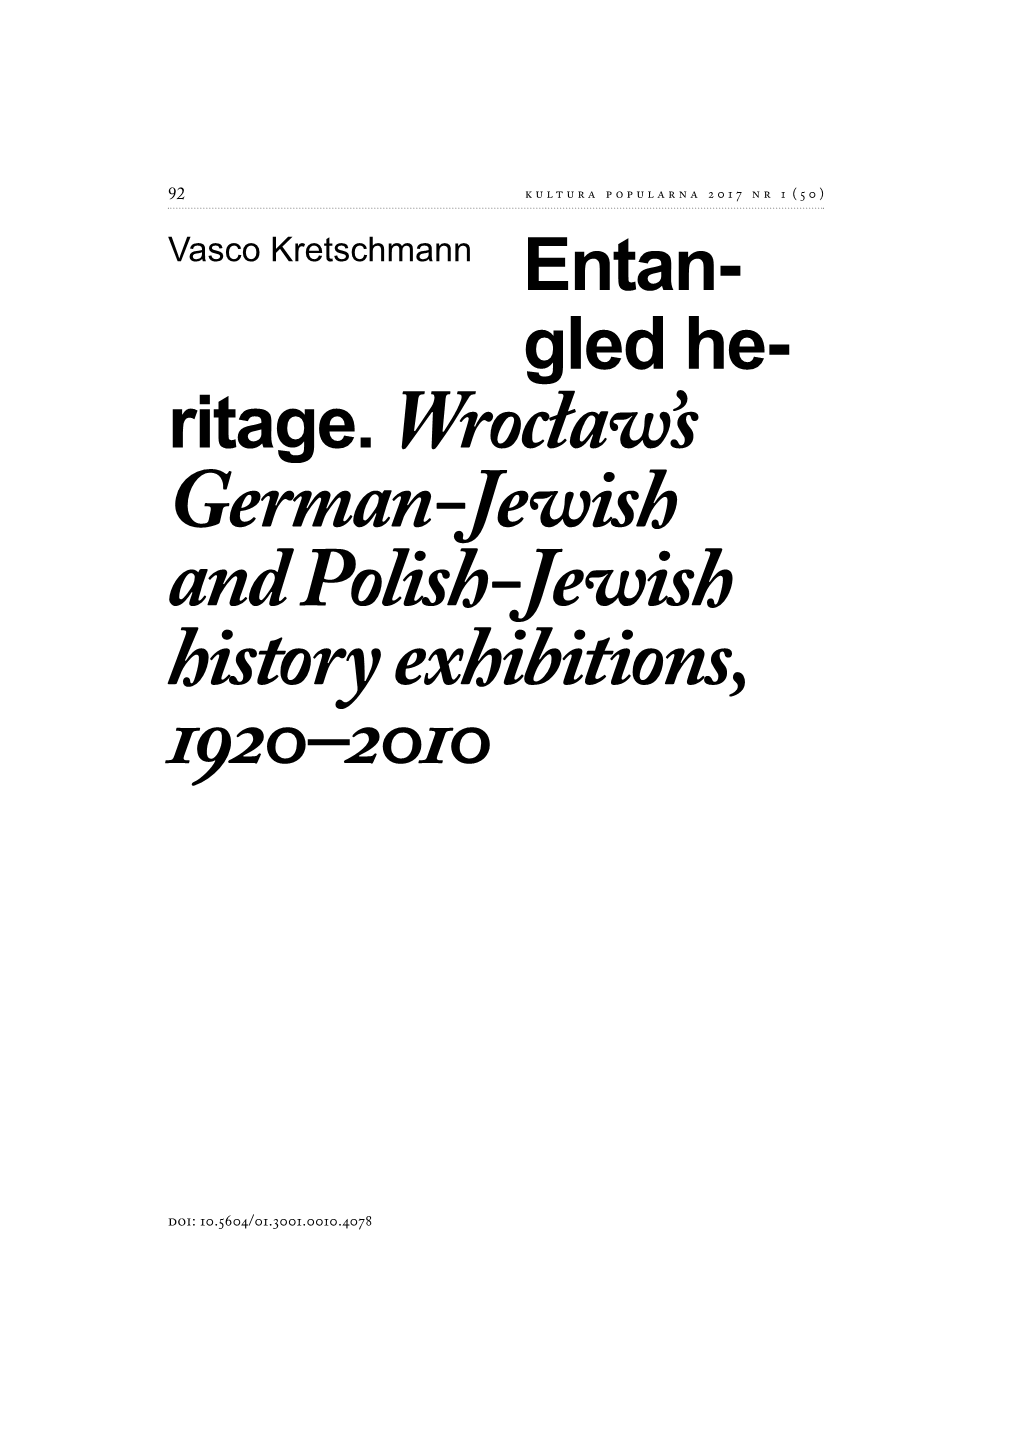 Ritage. Wrocław's German-Jewish and Polish-Jewish